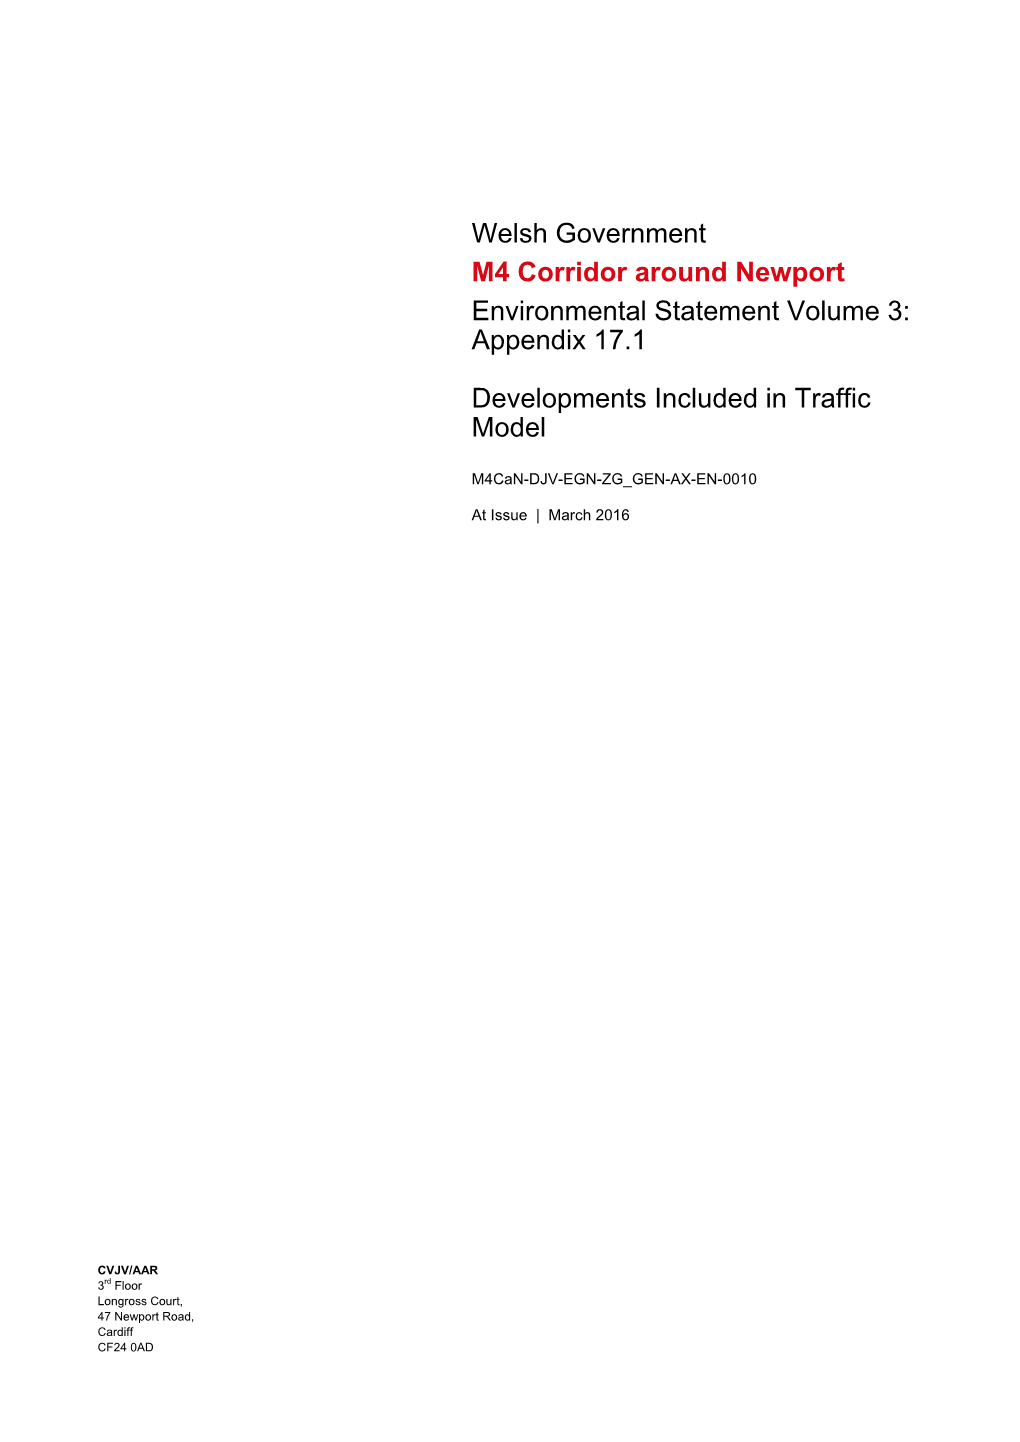 Appendix 17.1 Developments Included in Traffic Mo